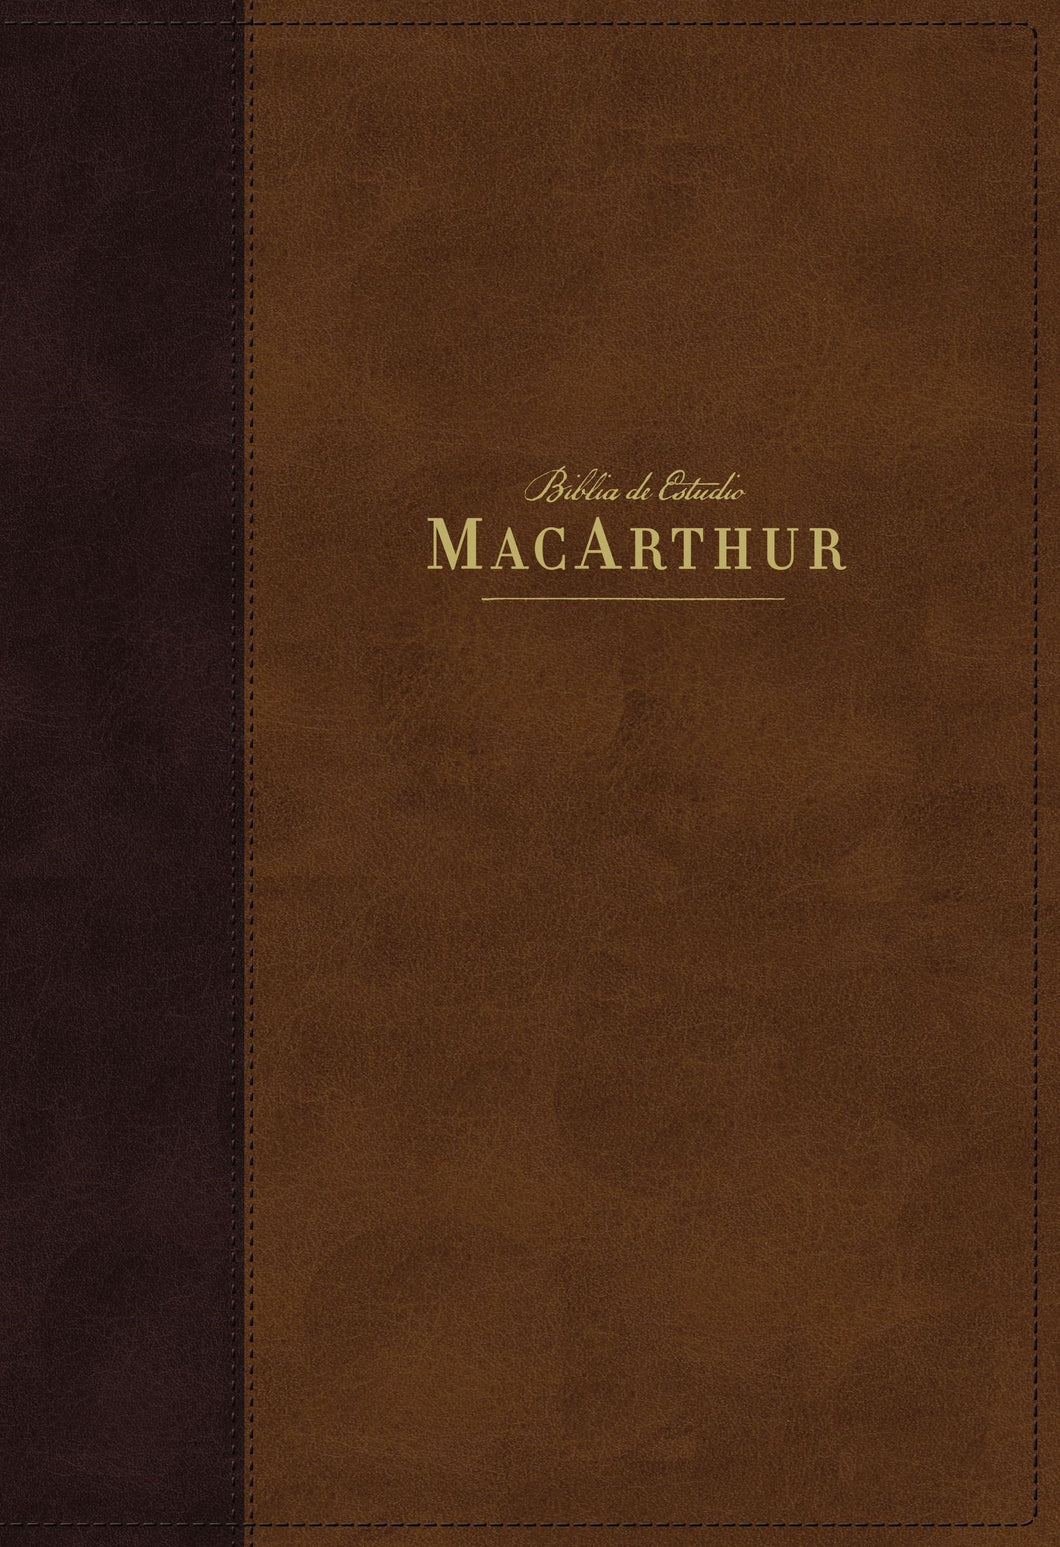 Spanish-NBLA MacArthur Study Bible (Biblia De Estudio MacArthur)-Brown Leathersoft